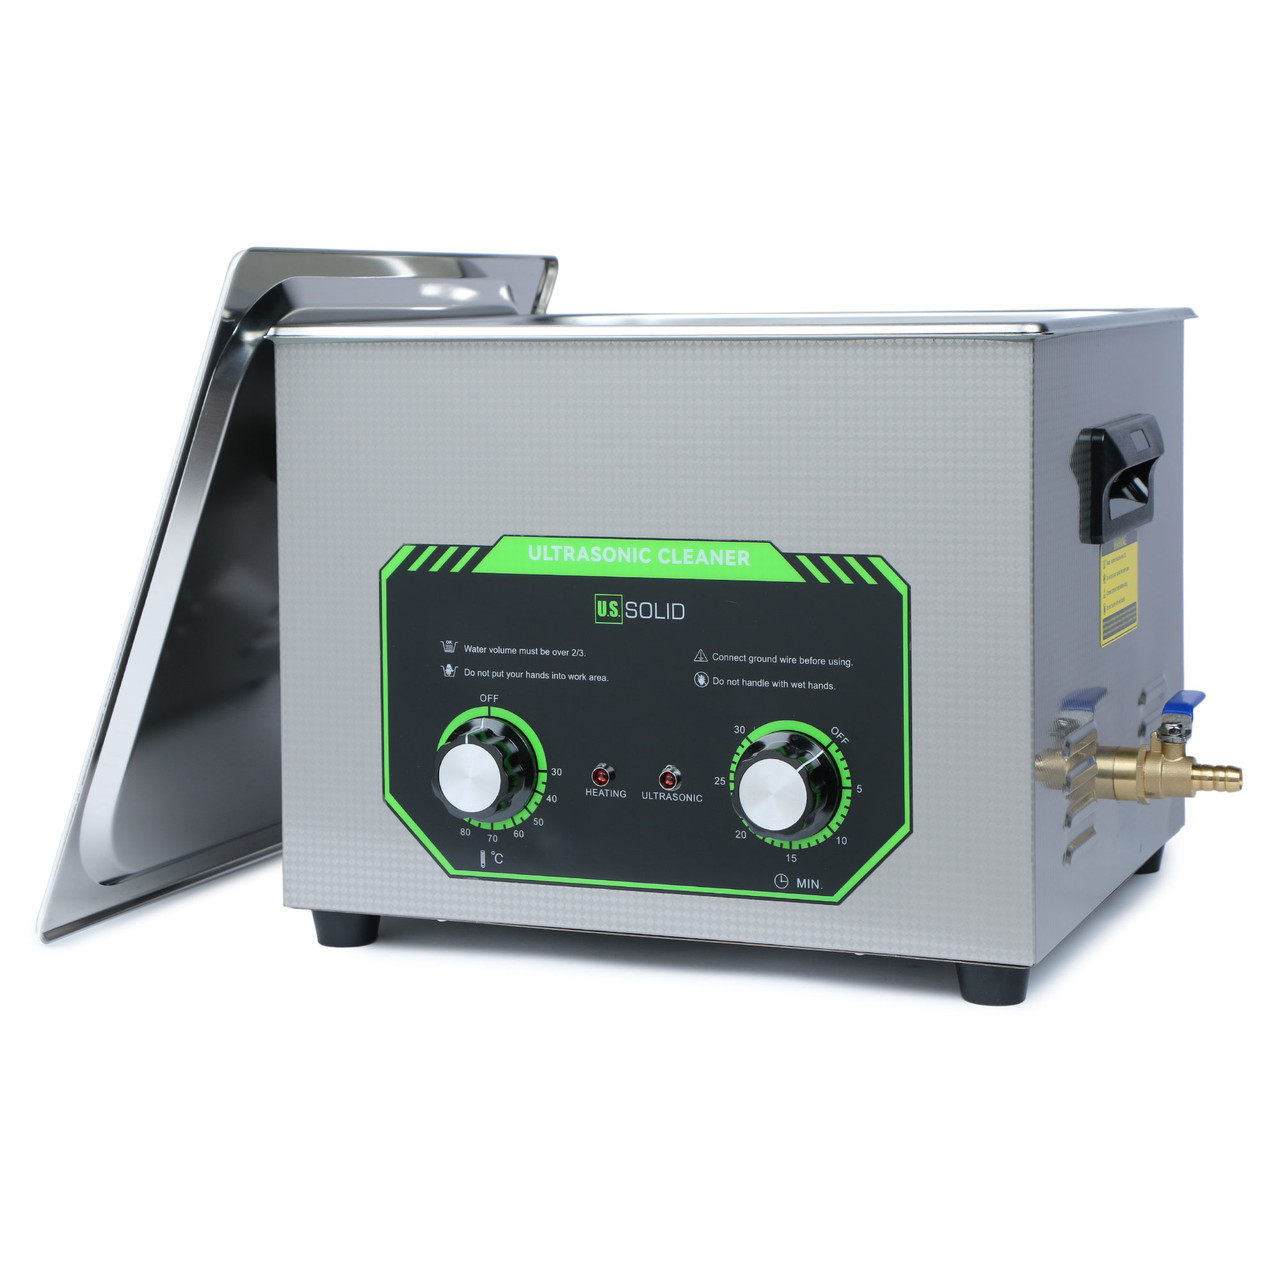 15L U.S. Solid Mechanical Ultrasonic Cleaner - 4 gal 40 KHz Edelstahl-Ultraschallreinigungsmaschine für Industrie und Schmuck - Max. Heizungstemp. 176℉ - FCC, CE, RoHS, UL zertifiziert